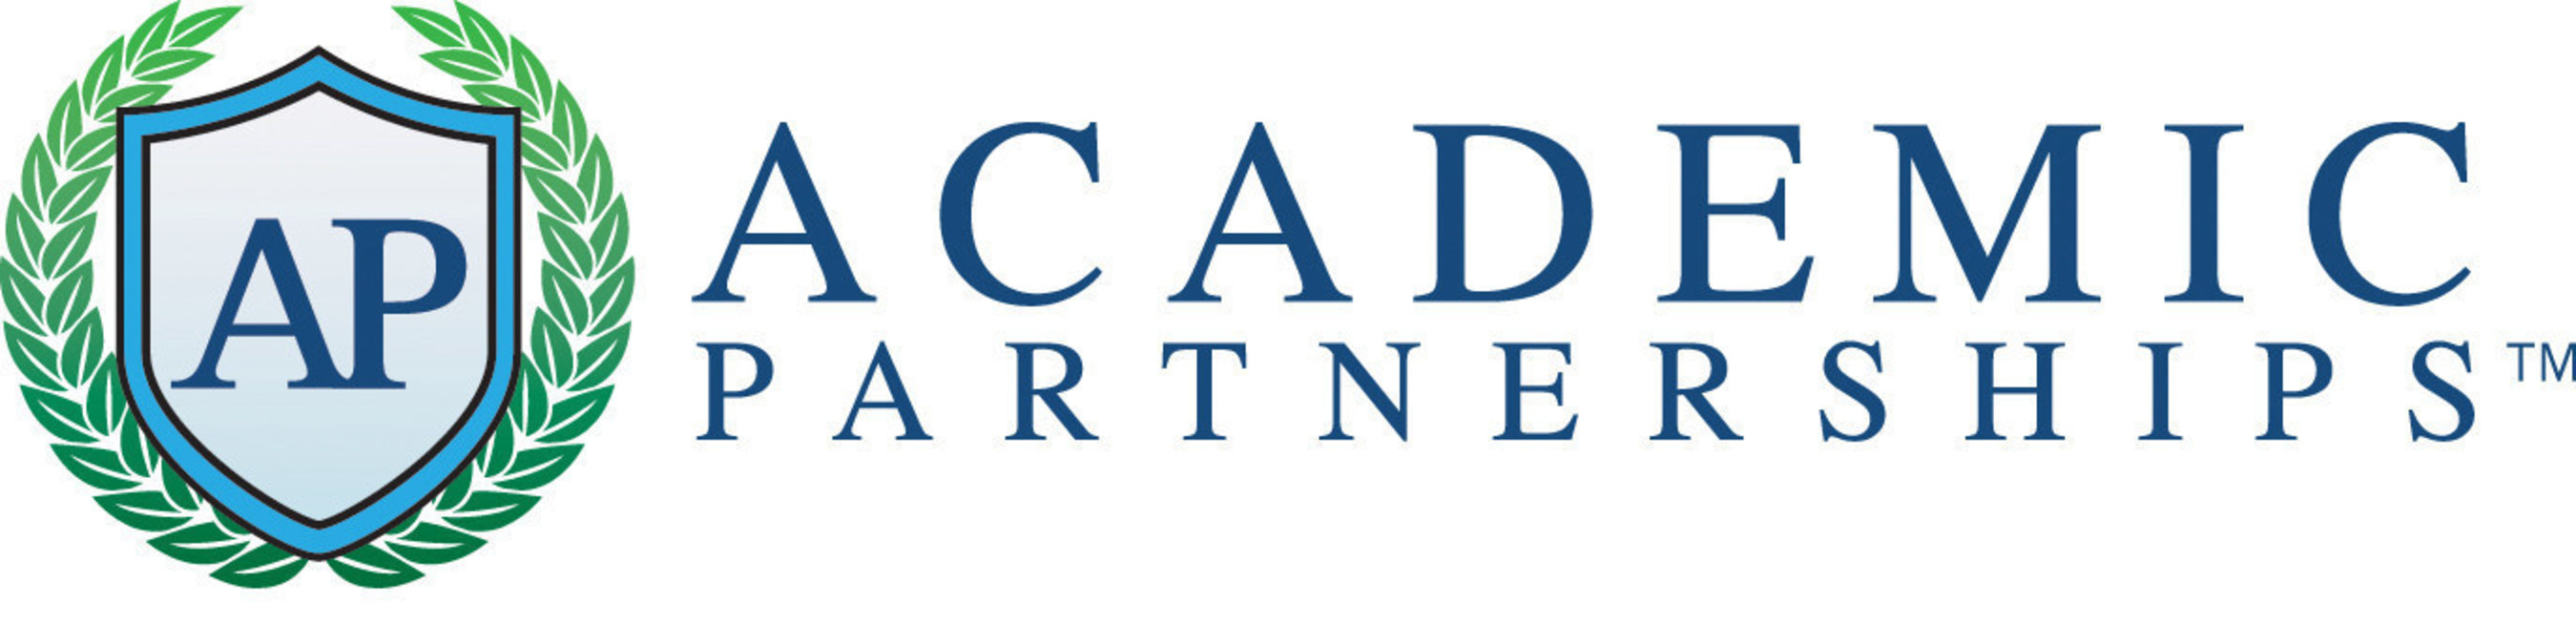 Academic Partnerships logo (PRNewsFoto/University of South Carolina,Aca)